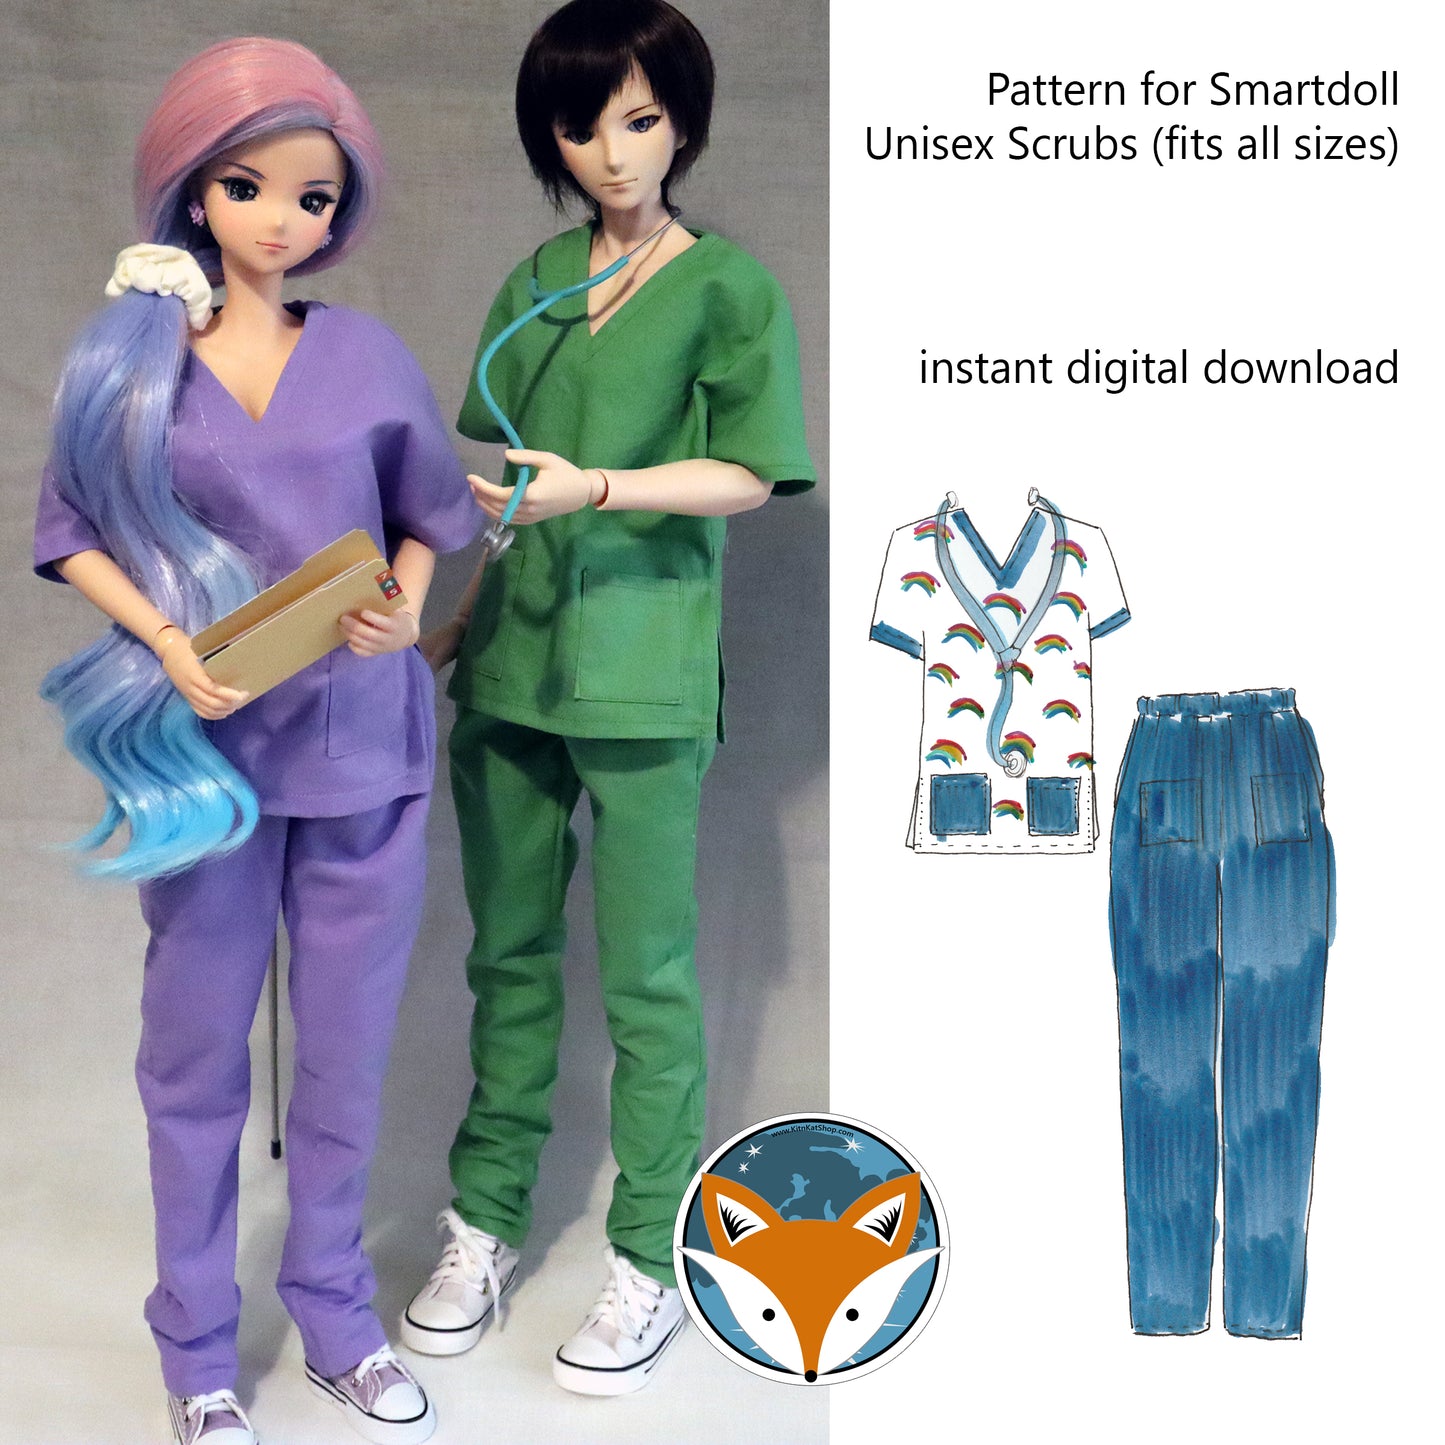 Digital Pattern for Smart Doll Scrubs - Unisex